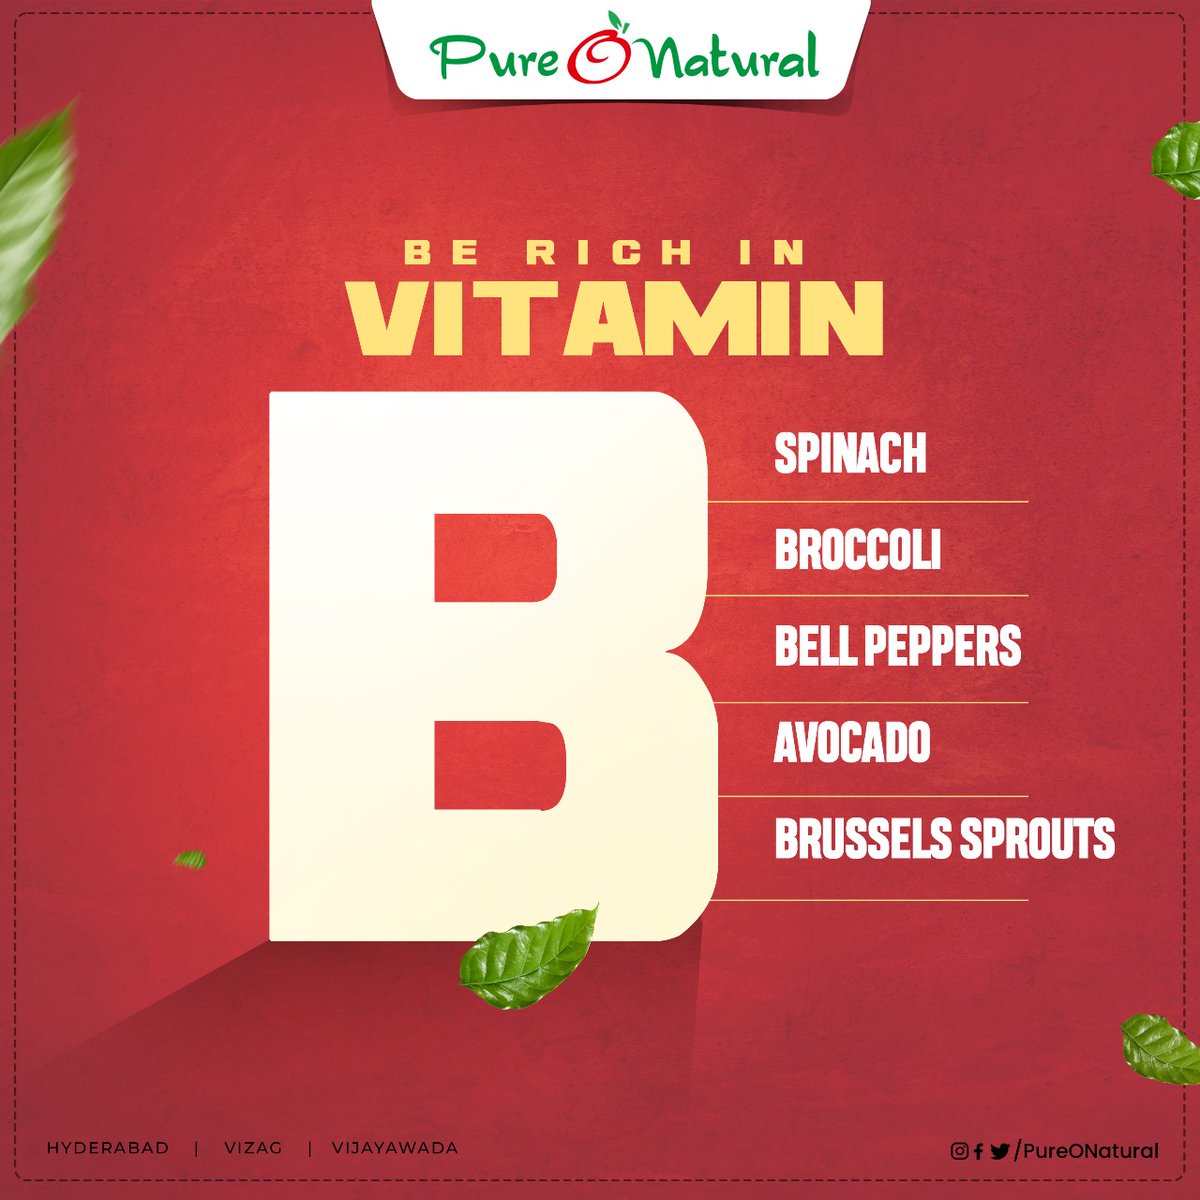 Get Your Vitamin B ❤

#PureONatural #Hyderabad #Vizag #Vijaywada #FarmFresh #FreshVegetables